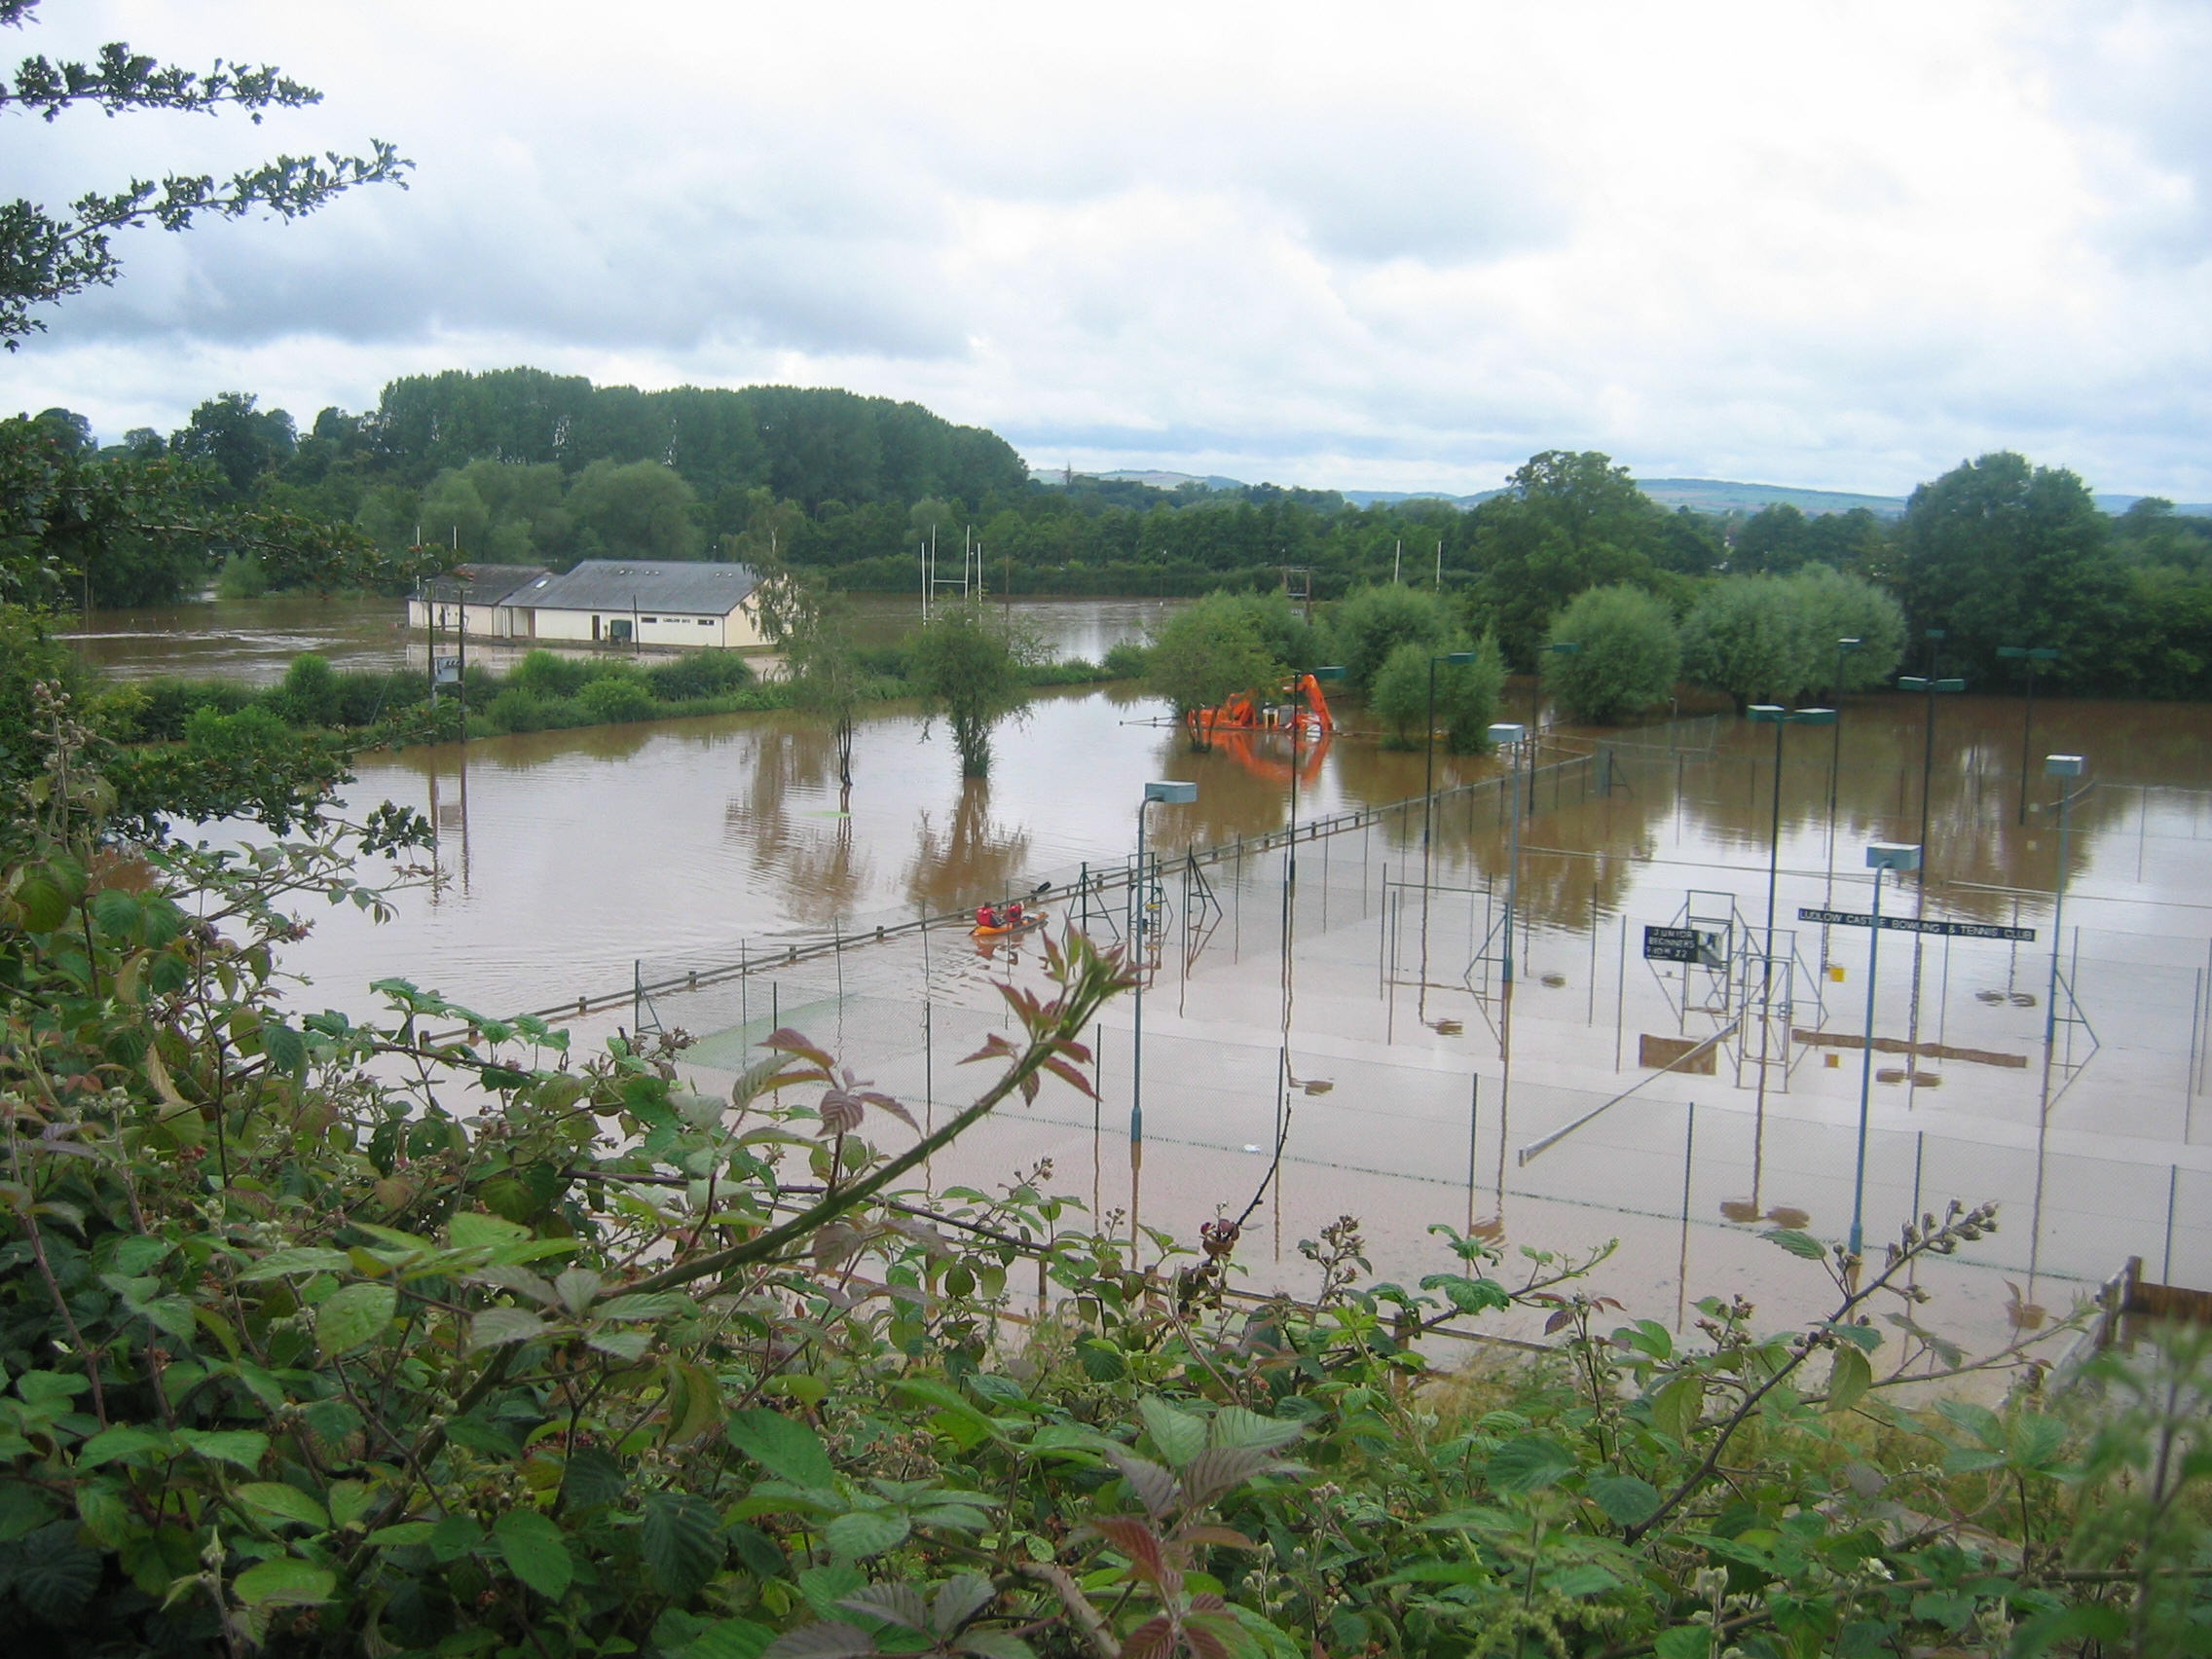 flooding in Ludlow - Linney recreation ground Feb 2014